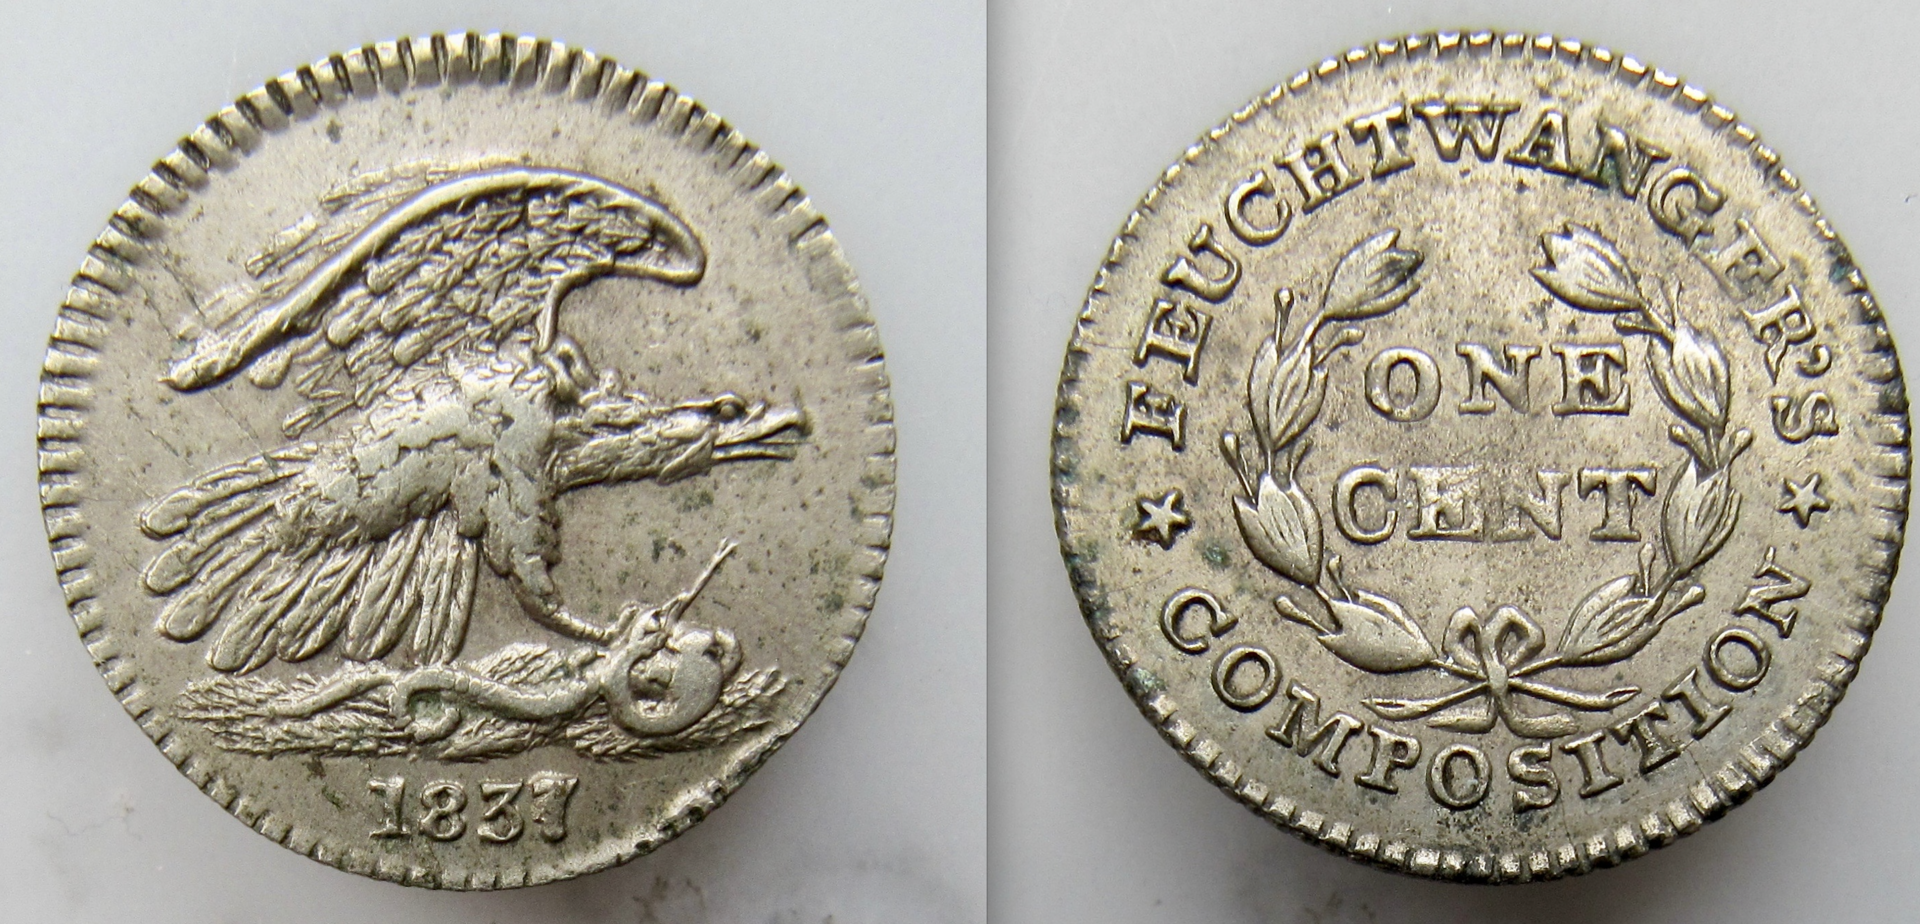 Feuchtwanger cent 1837, Variety 3-D rarity 7 - OBV:REV  VGP.png